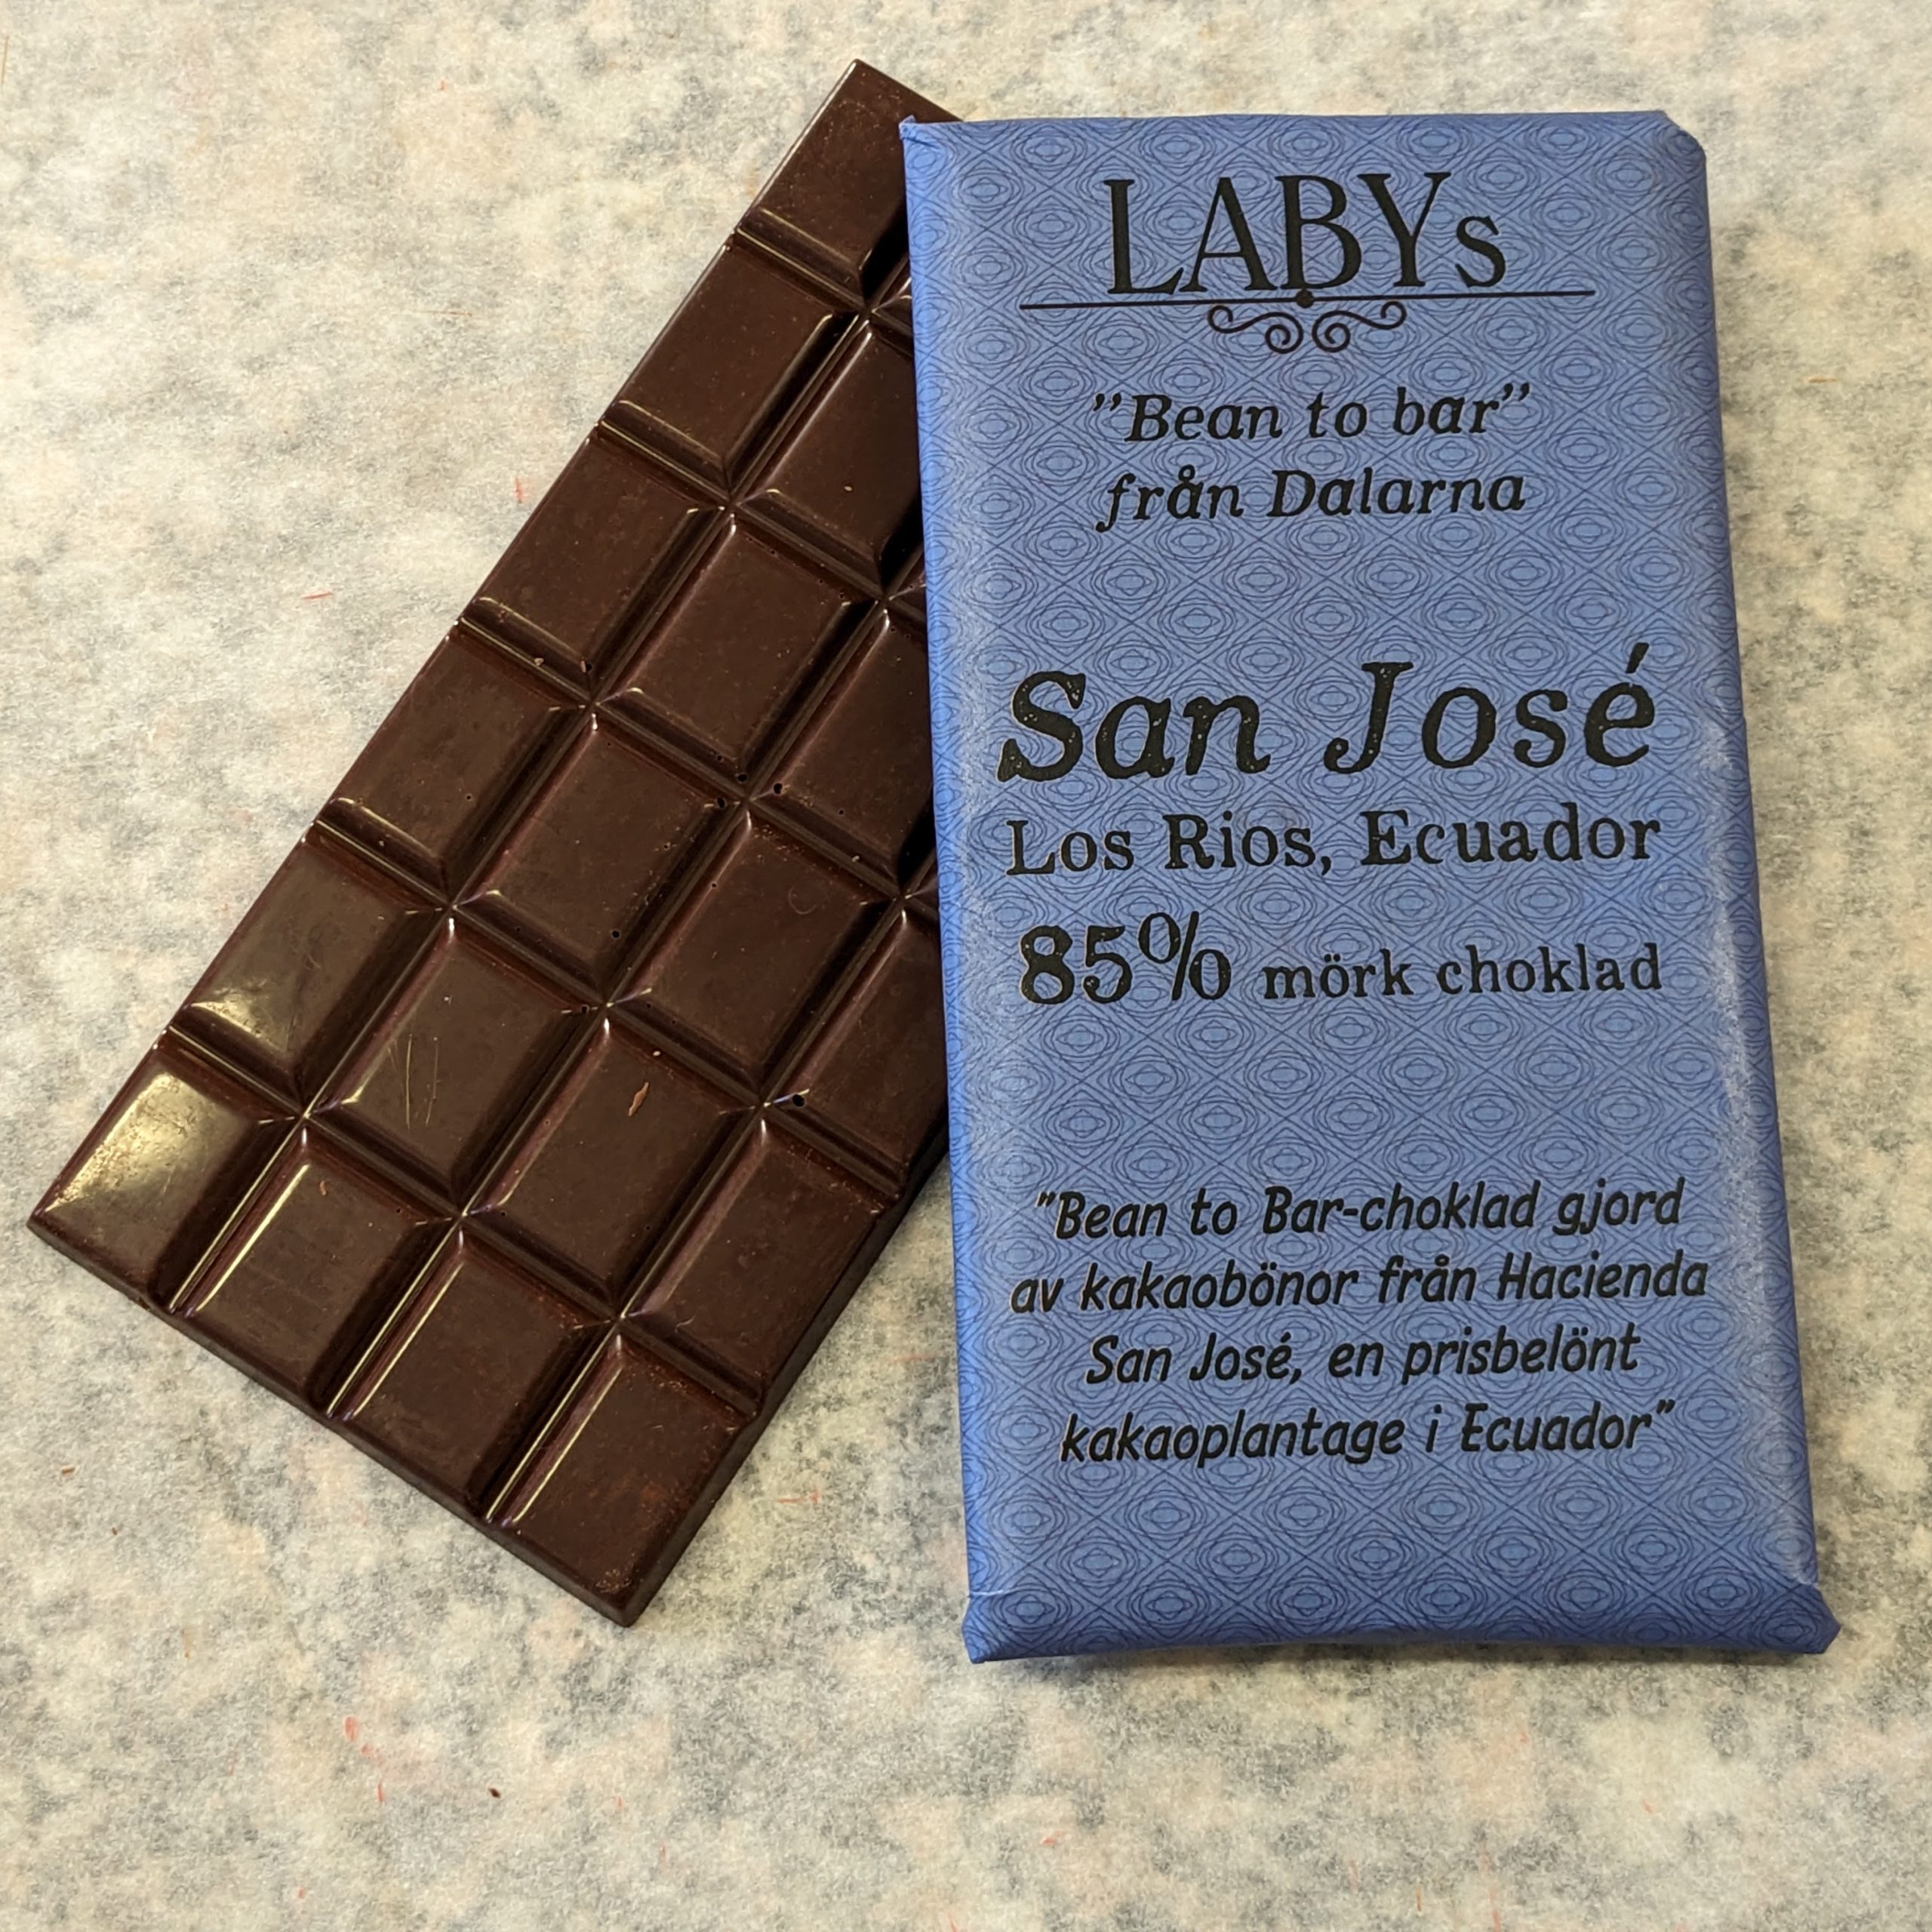 San Jose – Ecuador, 85% mörk choklad